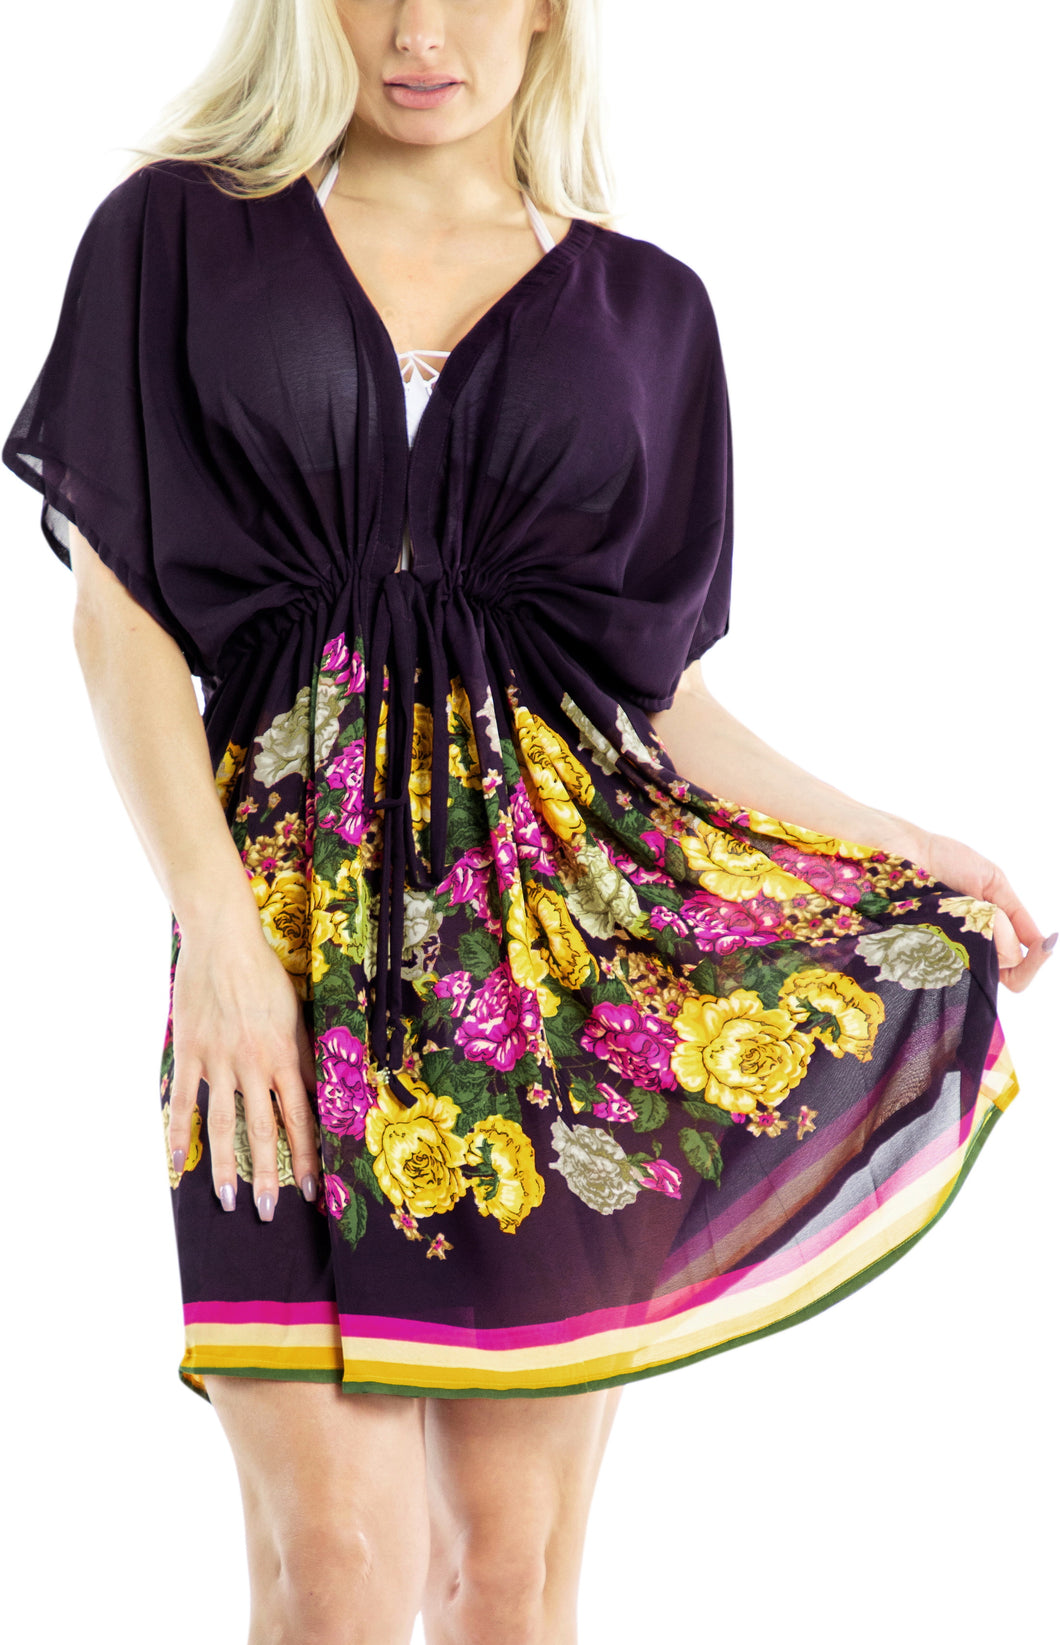 LA LEELA kimono cover ups for swimwear women Violet_Y441 OSFM 14-24W [L- 3X]